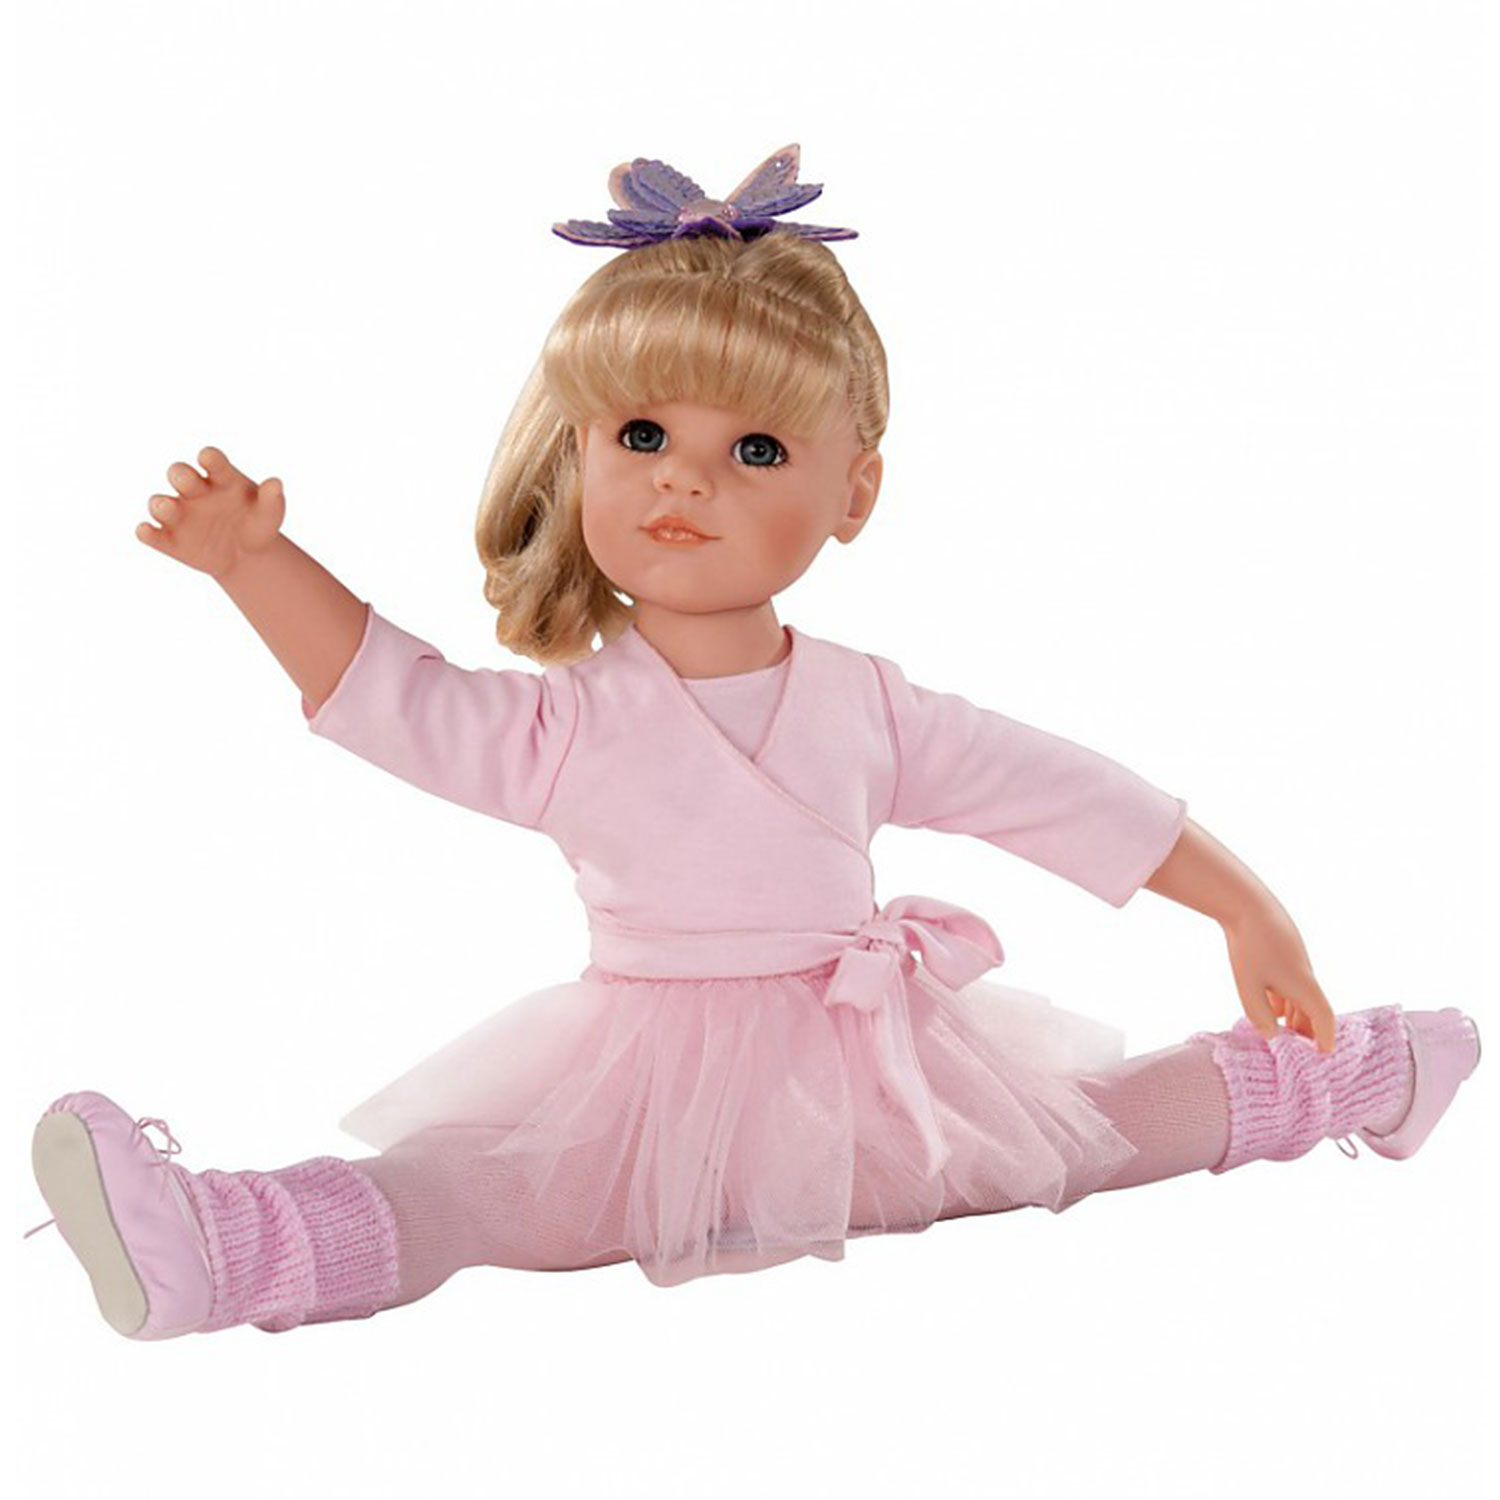 Кукла 50 купить. Кукла Gotz Ханна балерина, 50 см. Кукла Готц Ханна. Кукла Готц Ханна балерина. Куклы Gotz балерины.